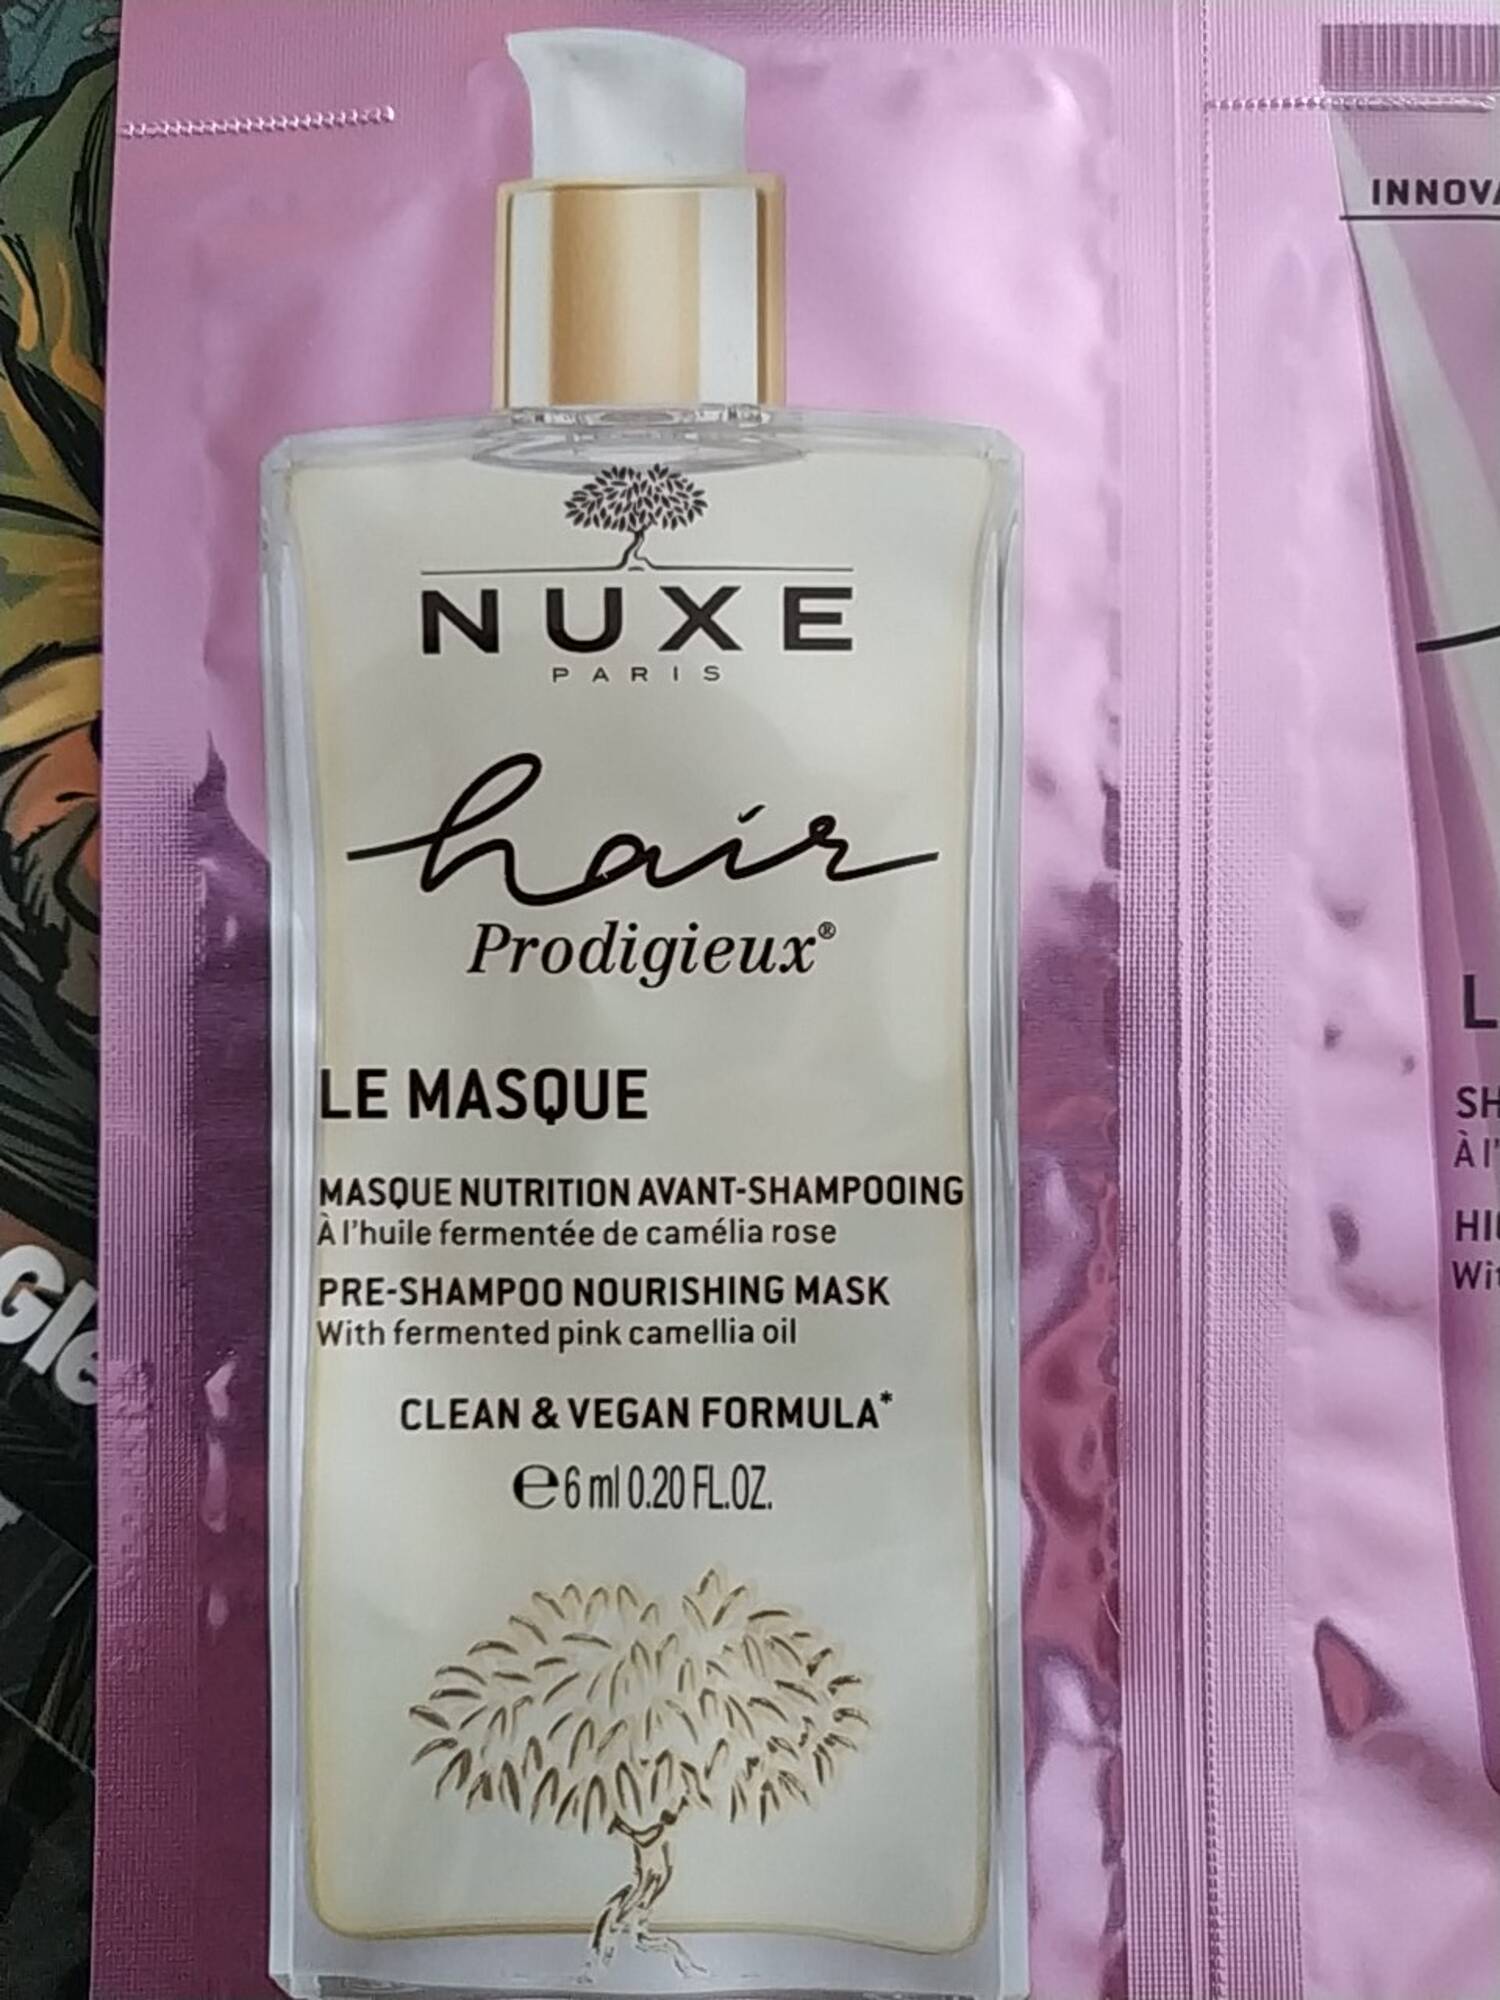 NUXE - Le masque - Masque nutrition avant-shampooing